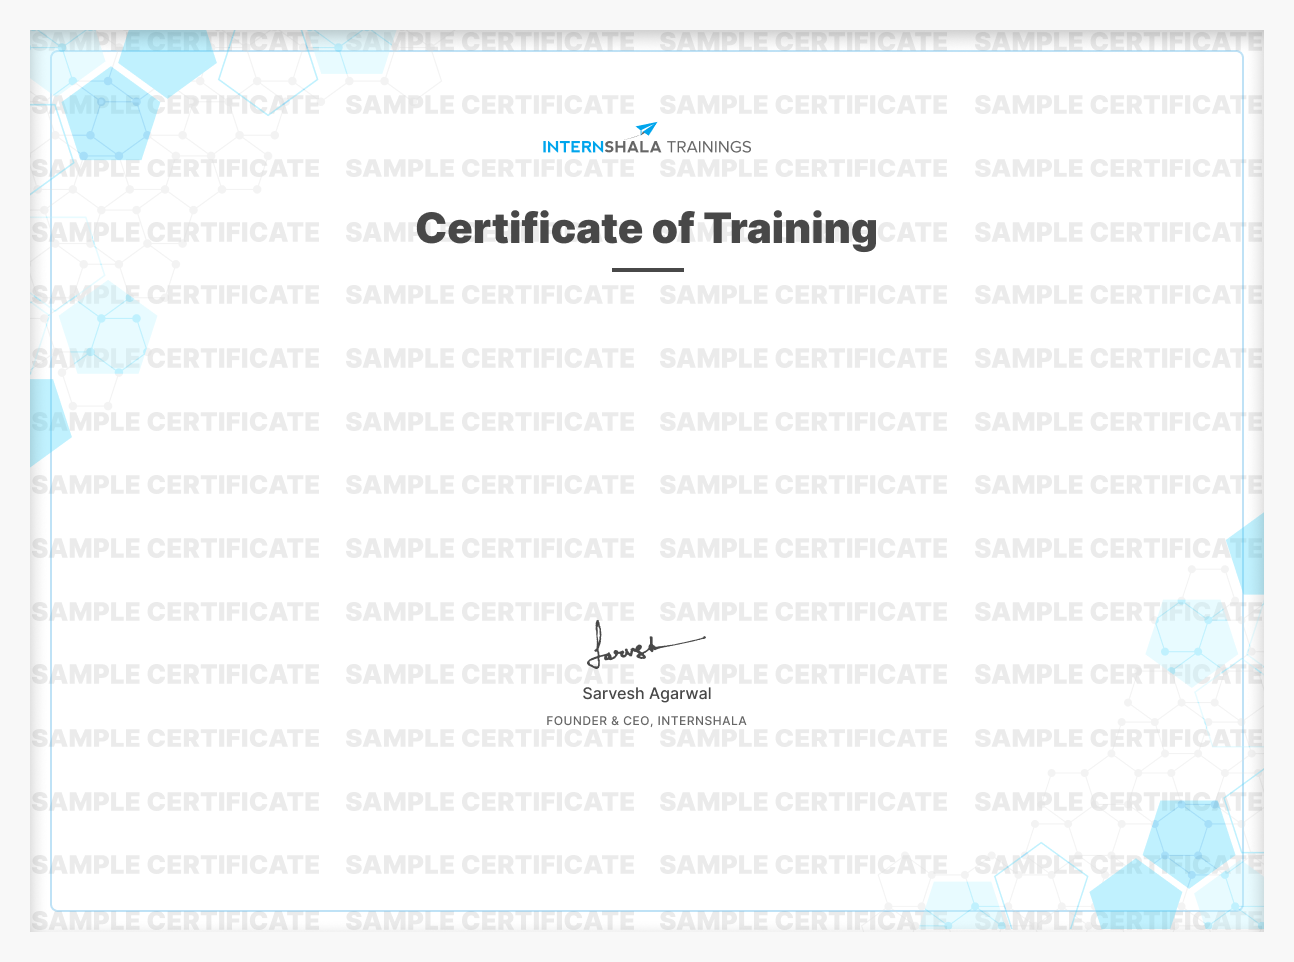 Revit Certification Training